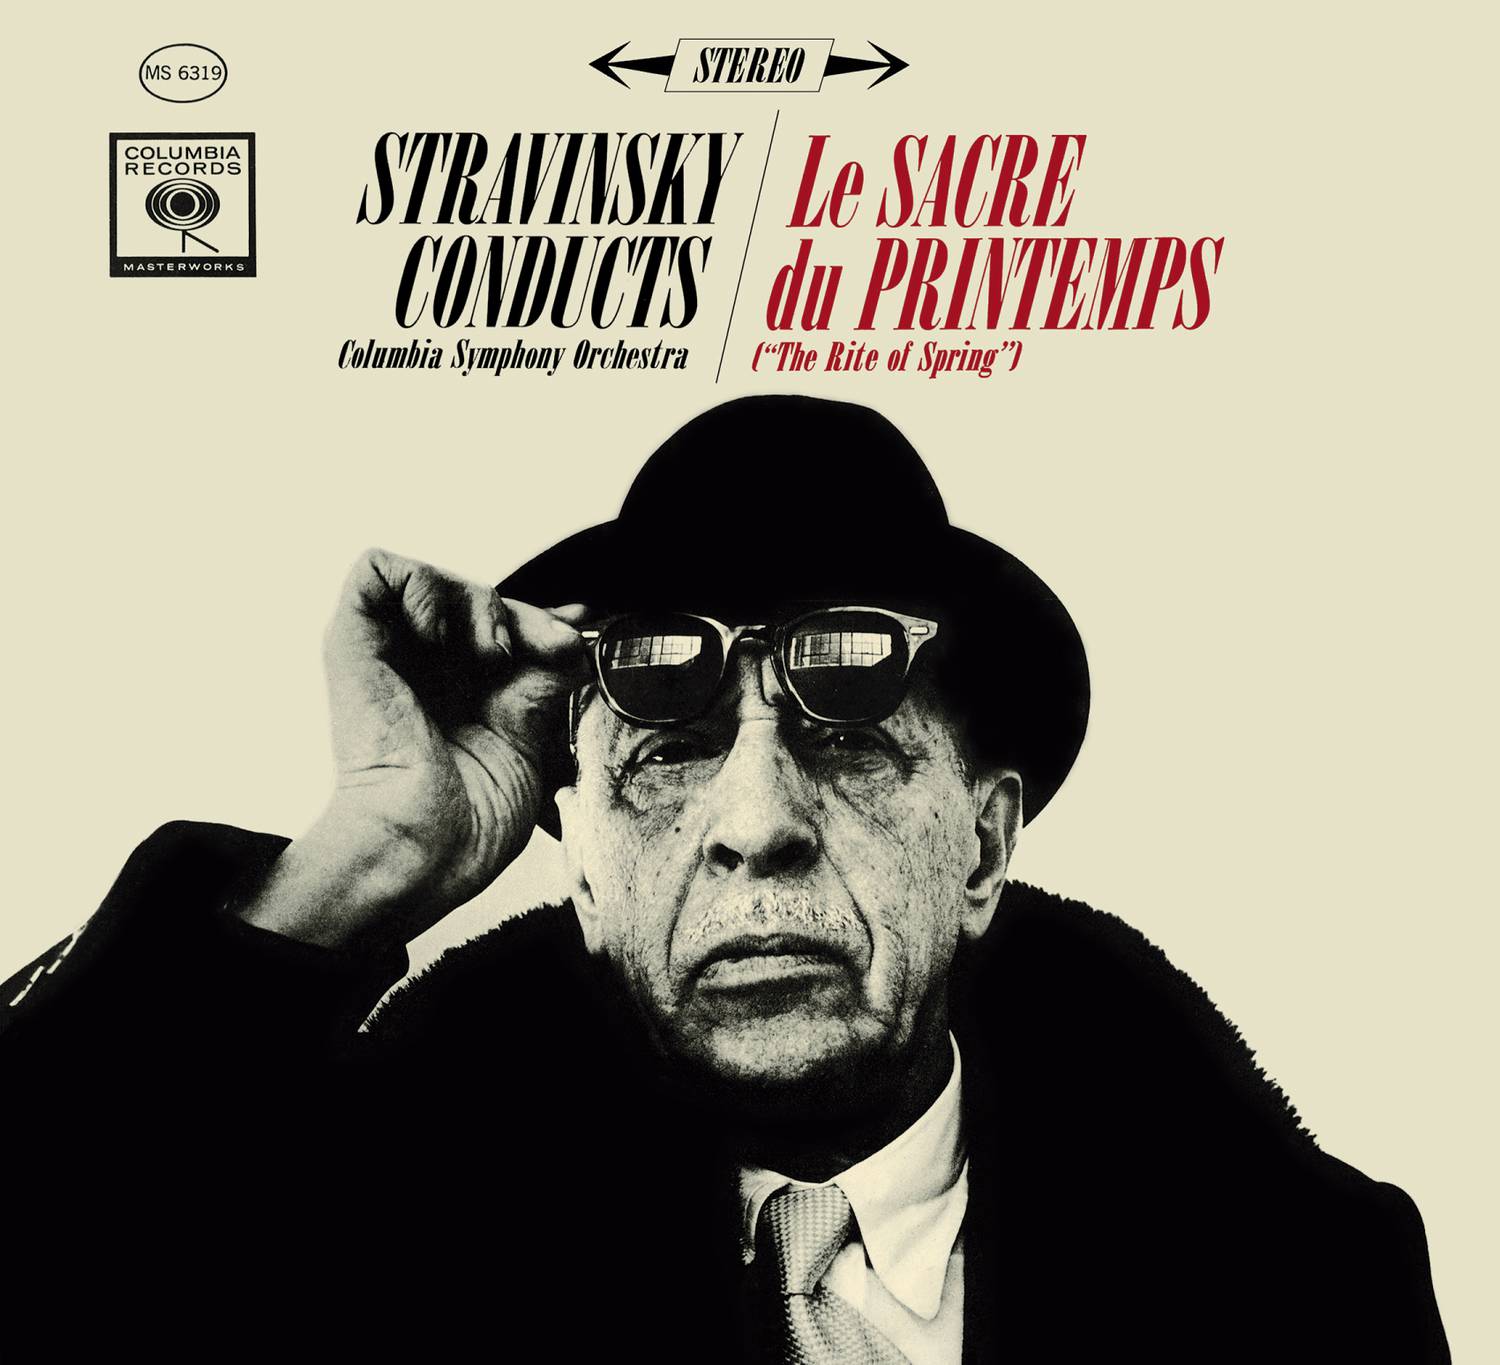 Stravinsky: Le sacre du printemps (The Rite of Spring)